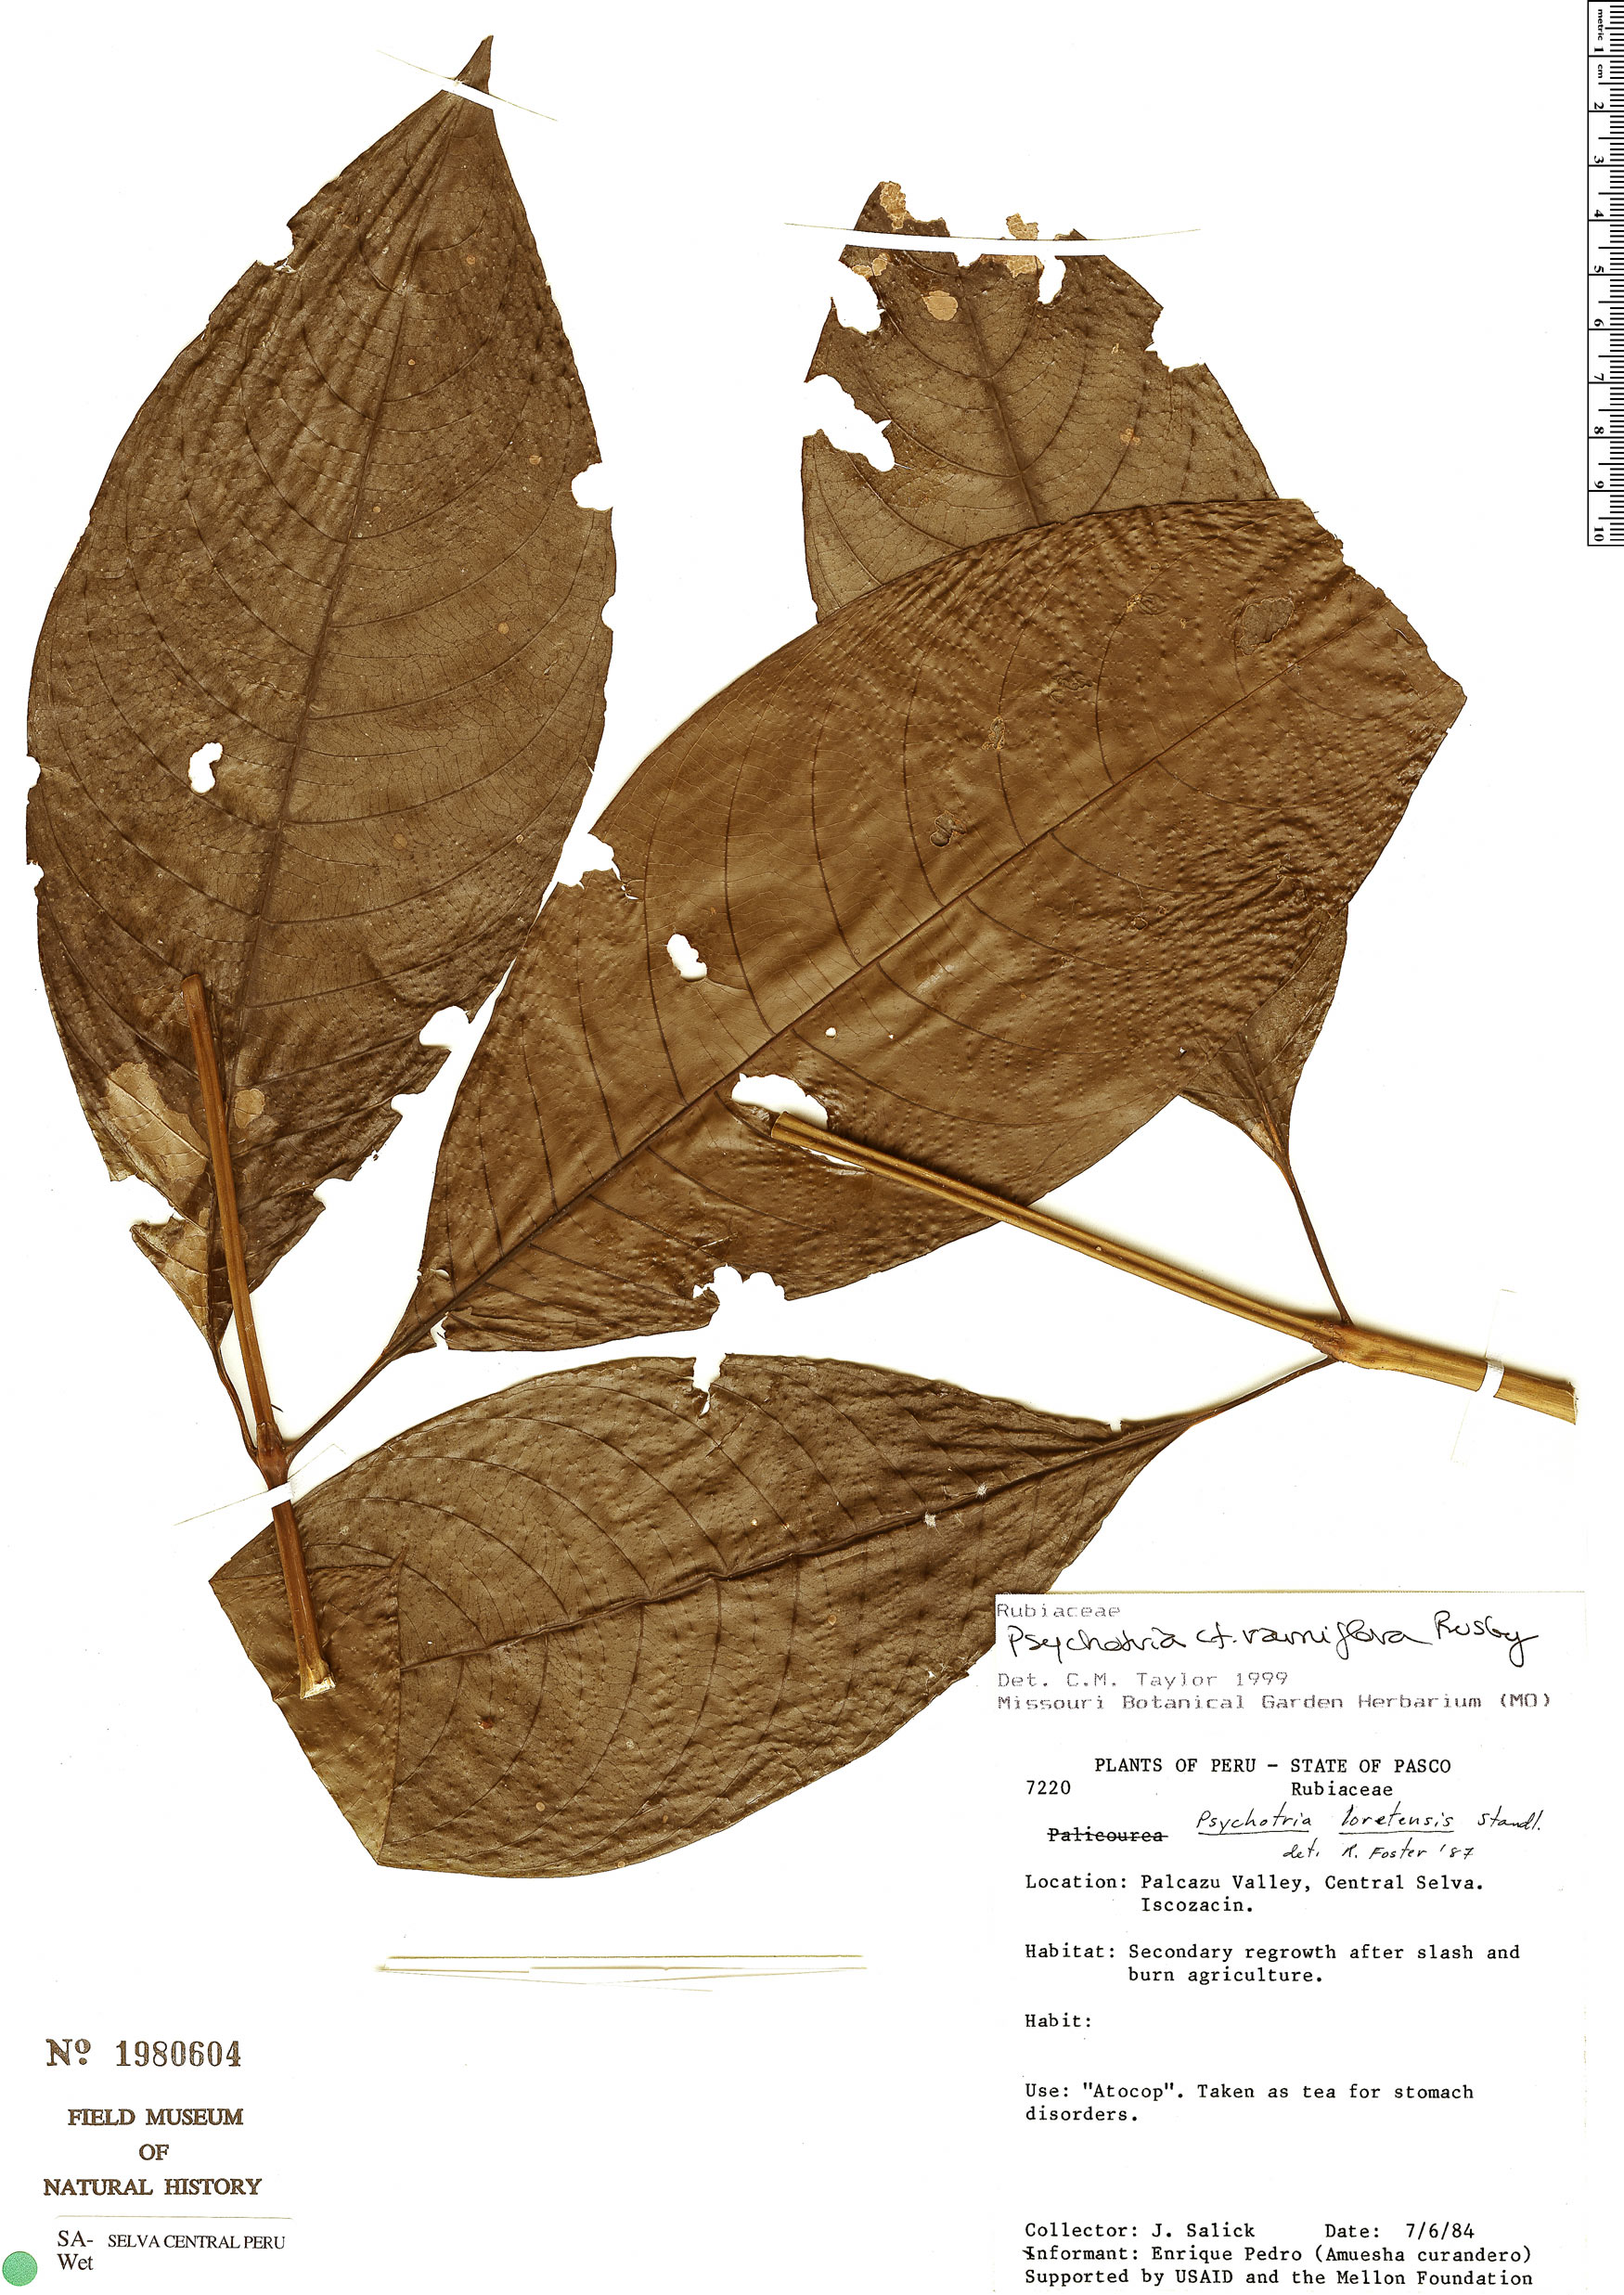 Psychotria ramiflora image